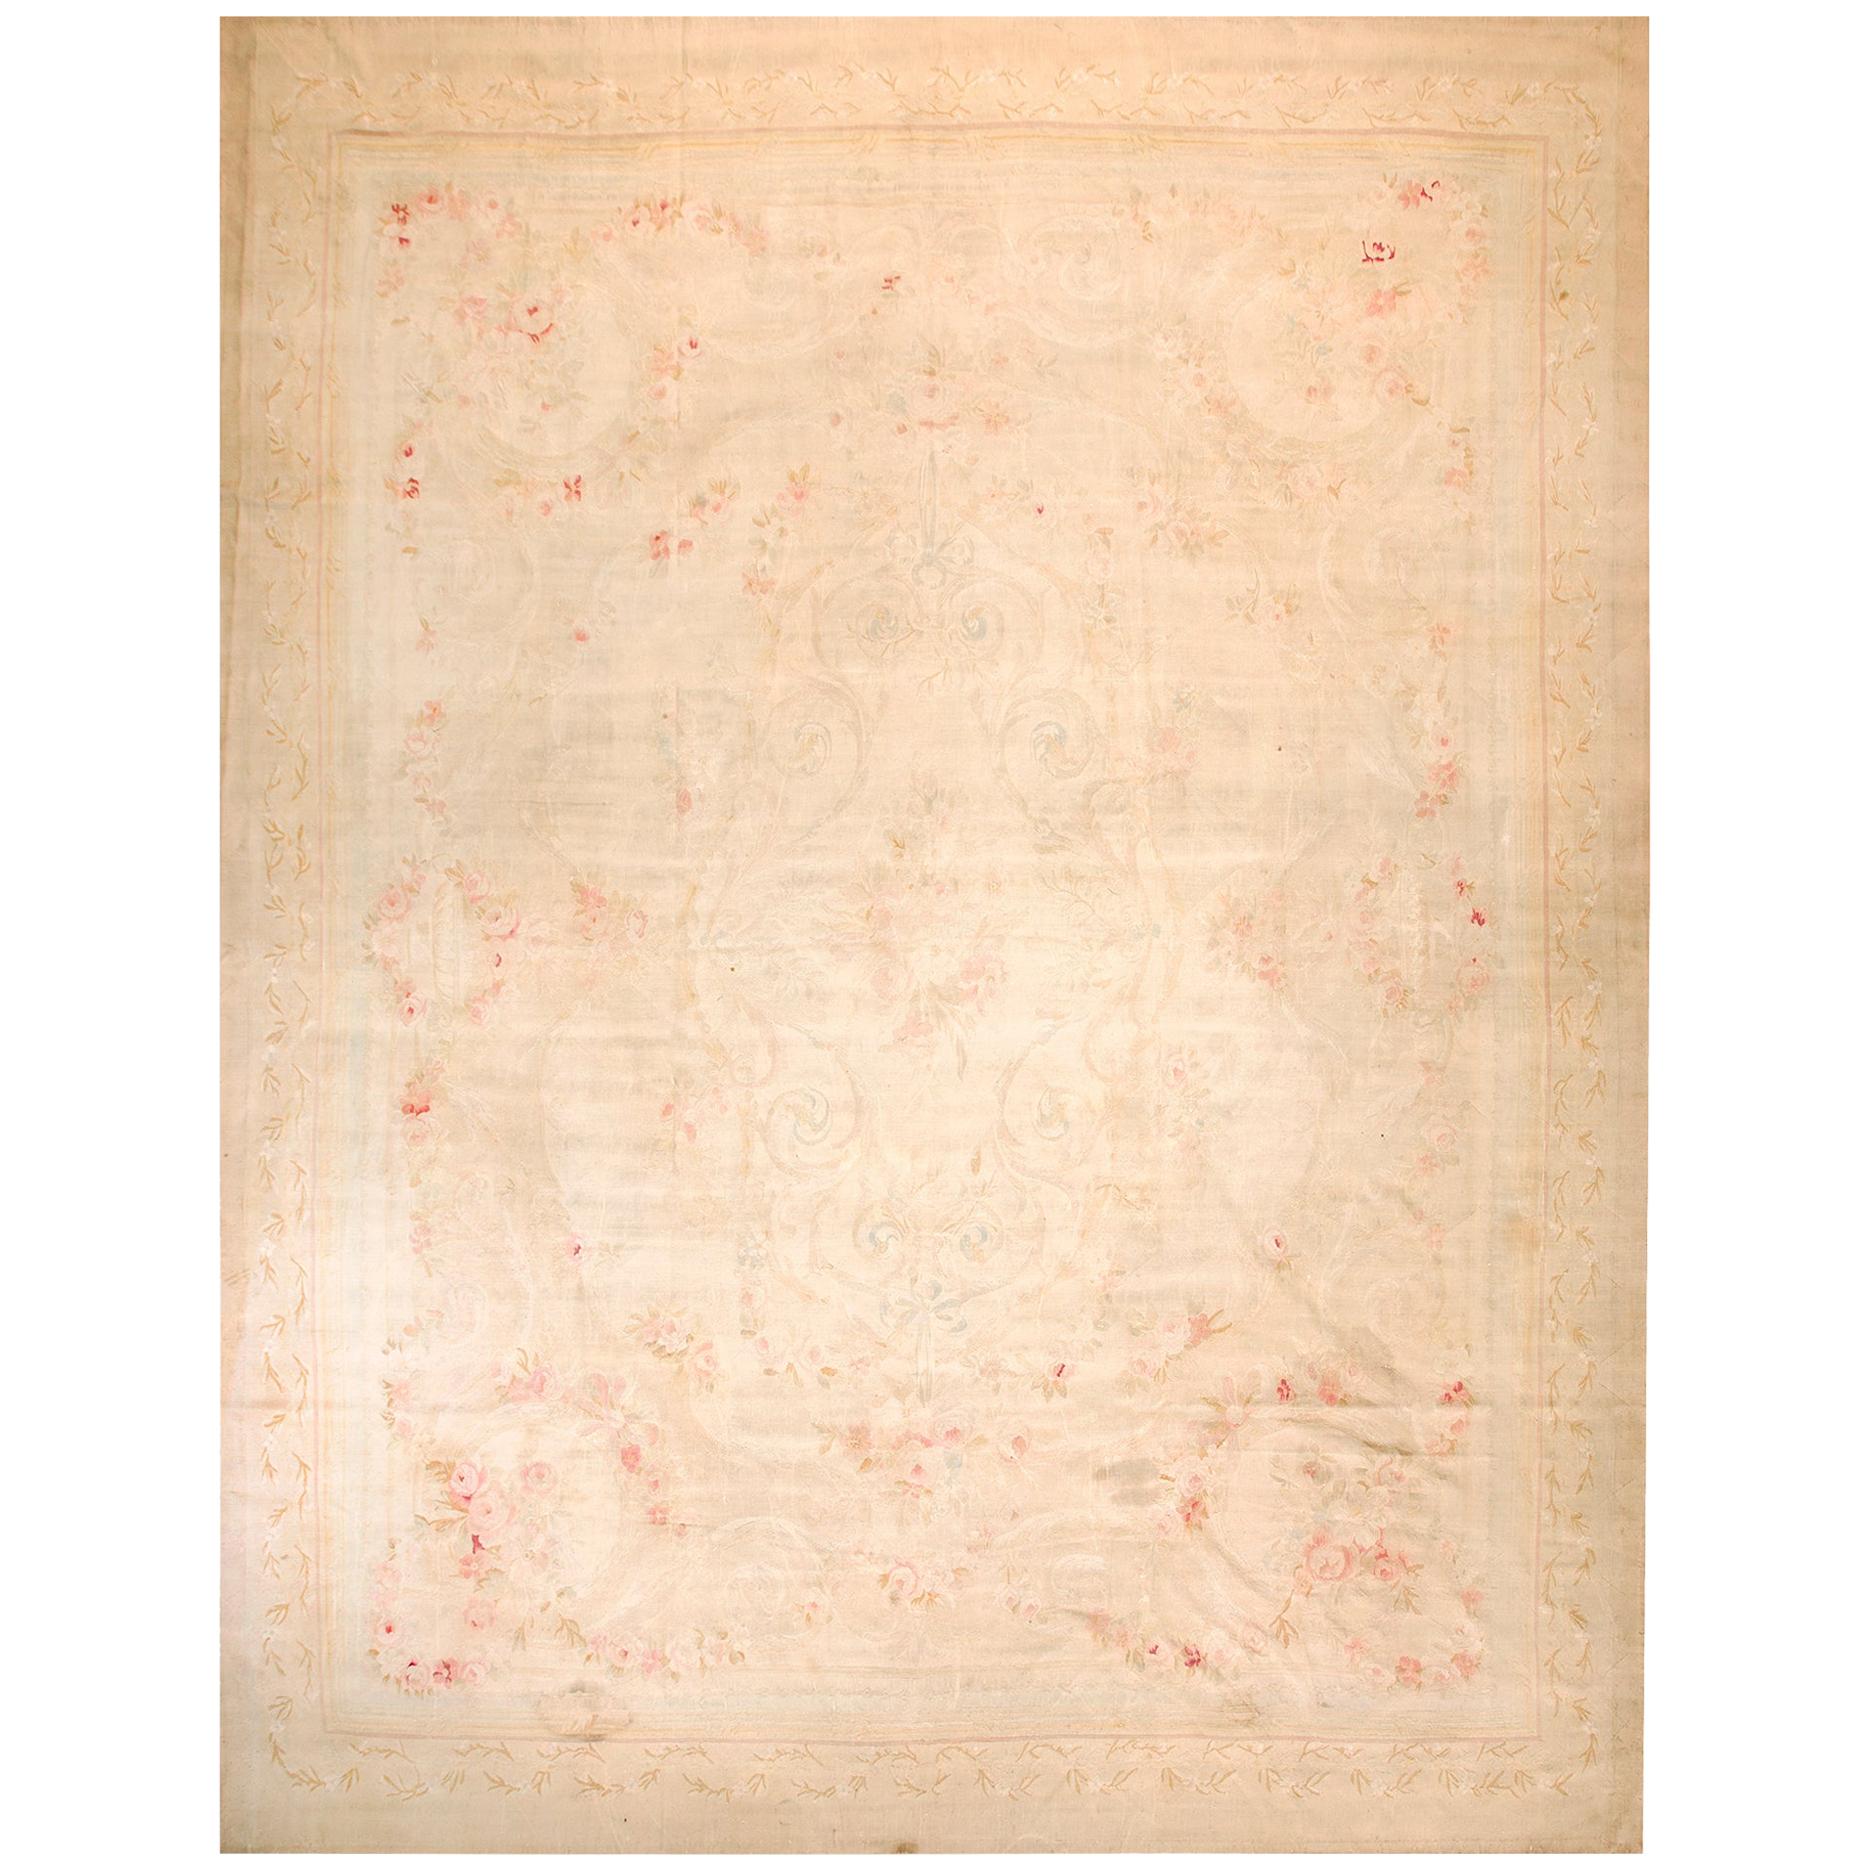 19th Century French Aubusson Carpet ( 12' x 15'6" - 365 x 472 )